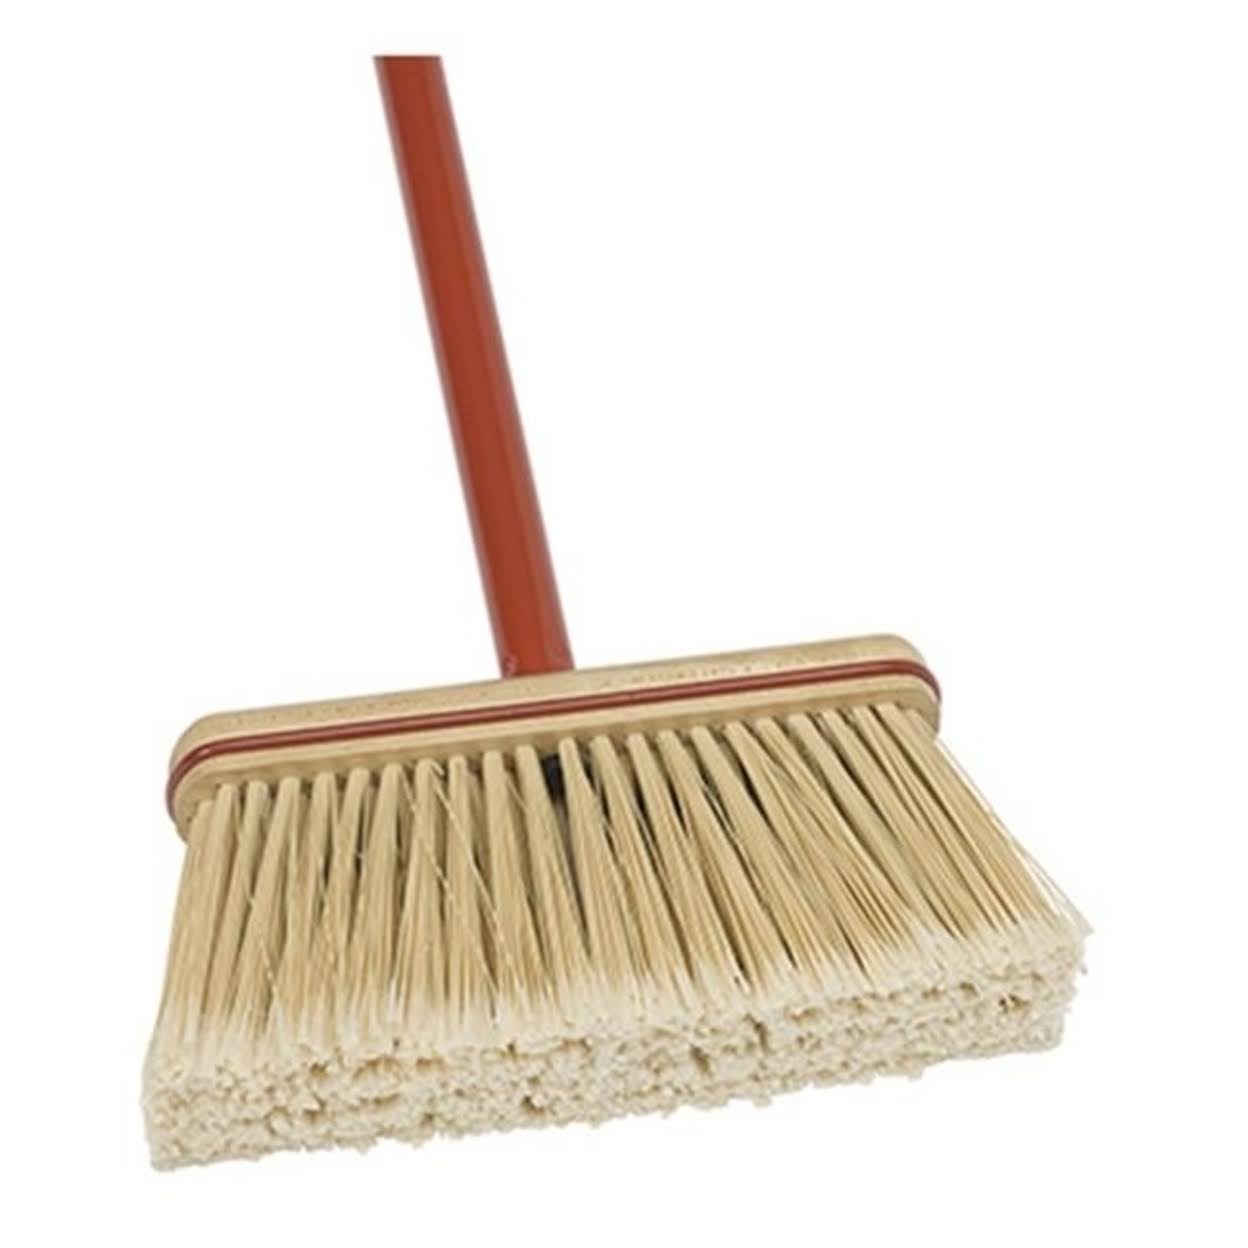 Harper Brush Works Upright Broom - Synthetic Bristles, Beige